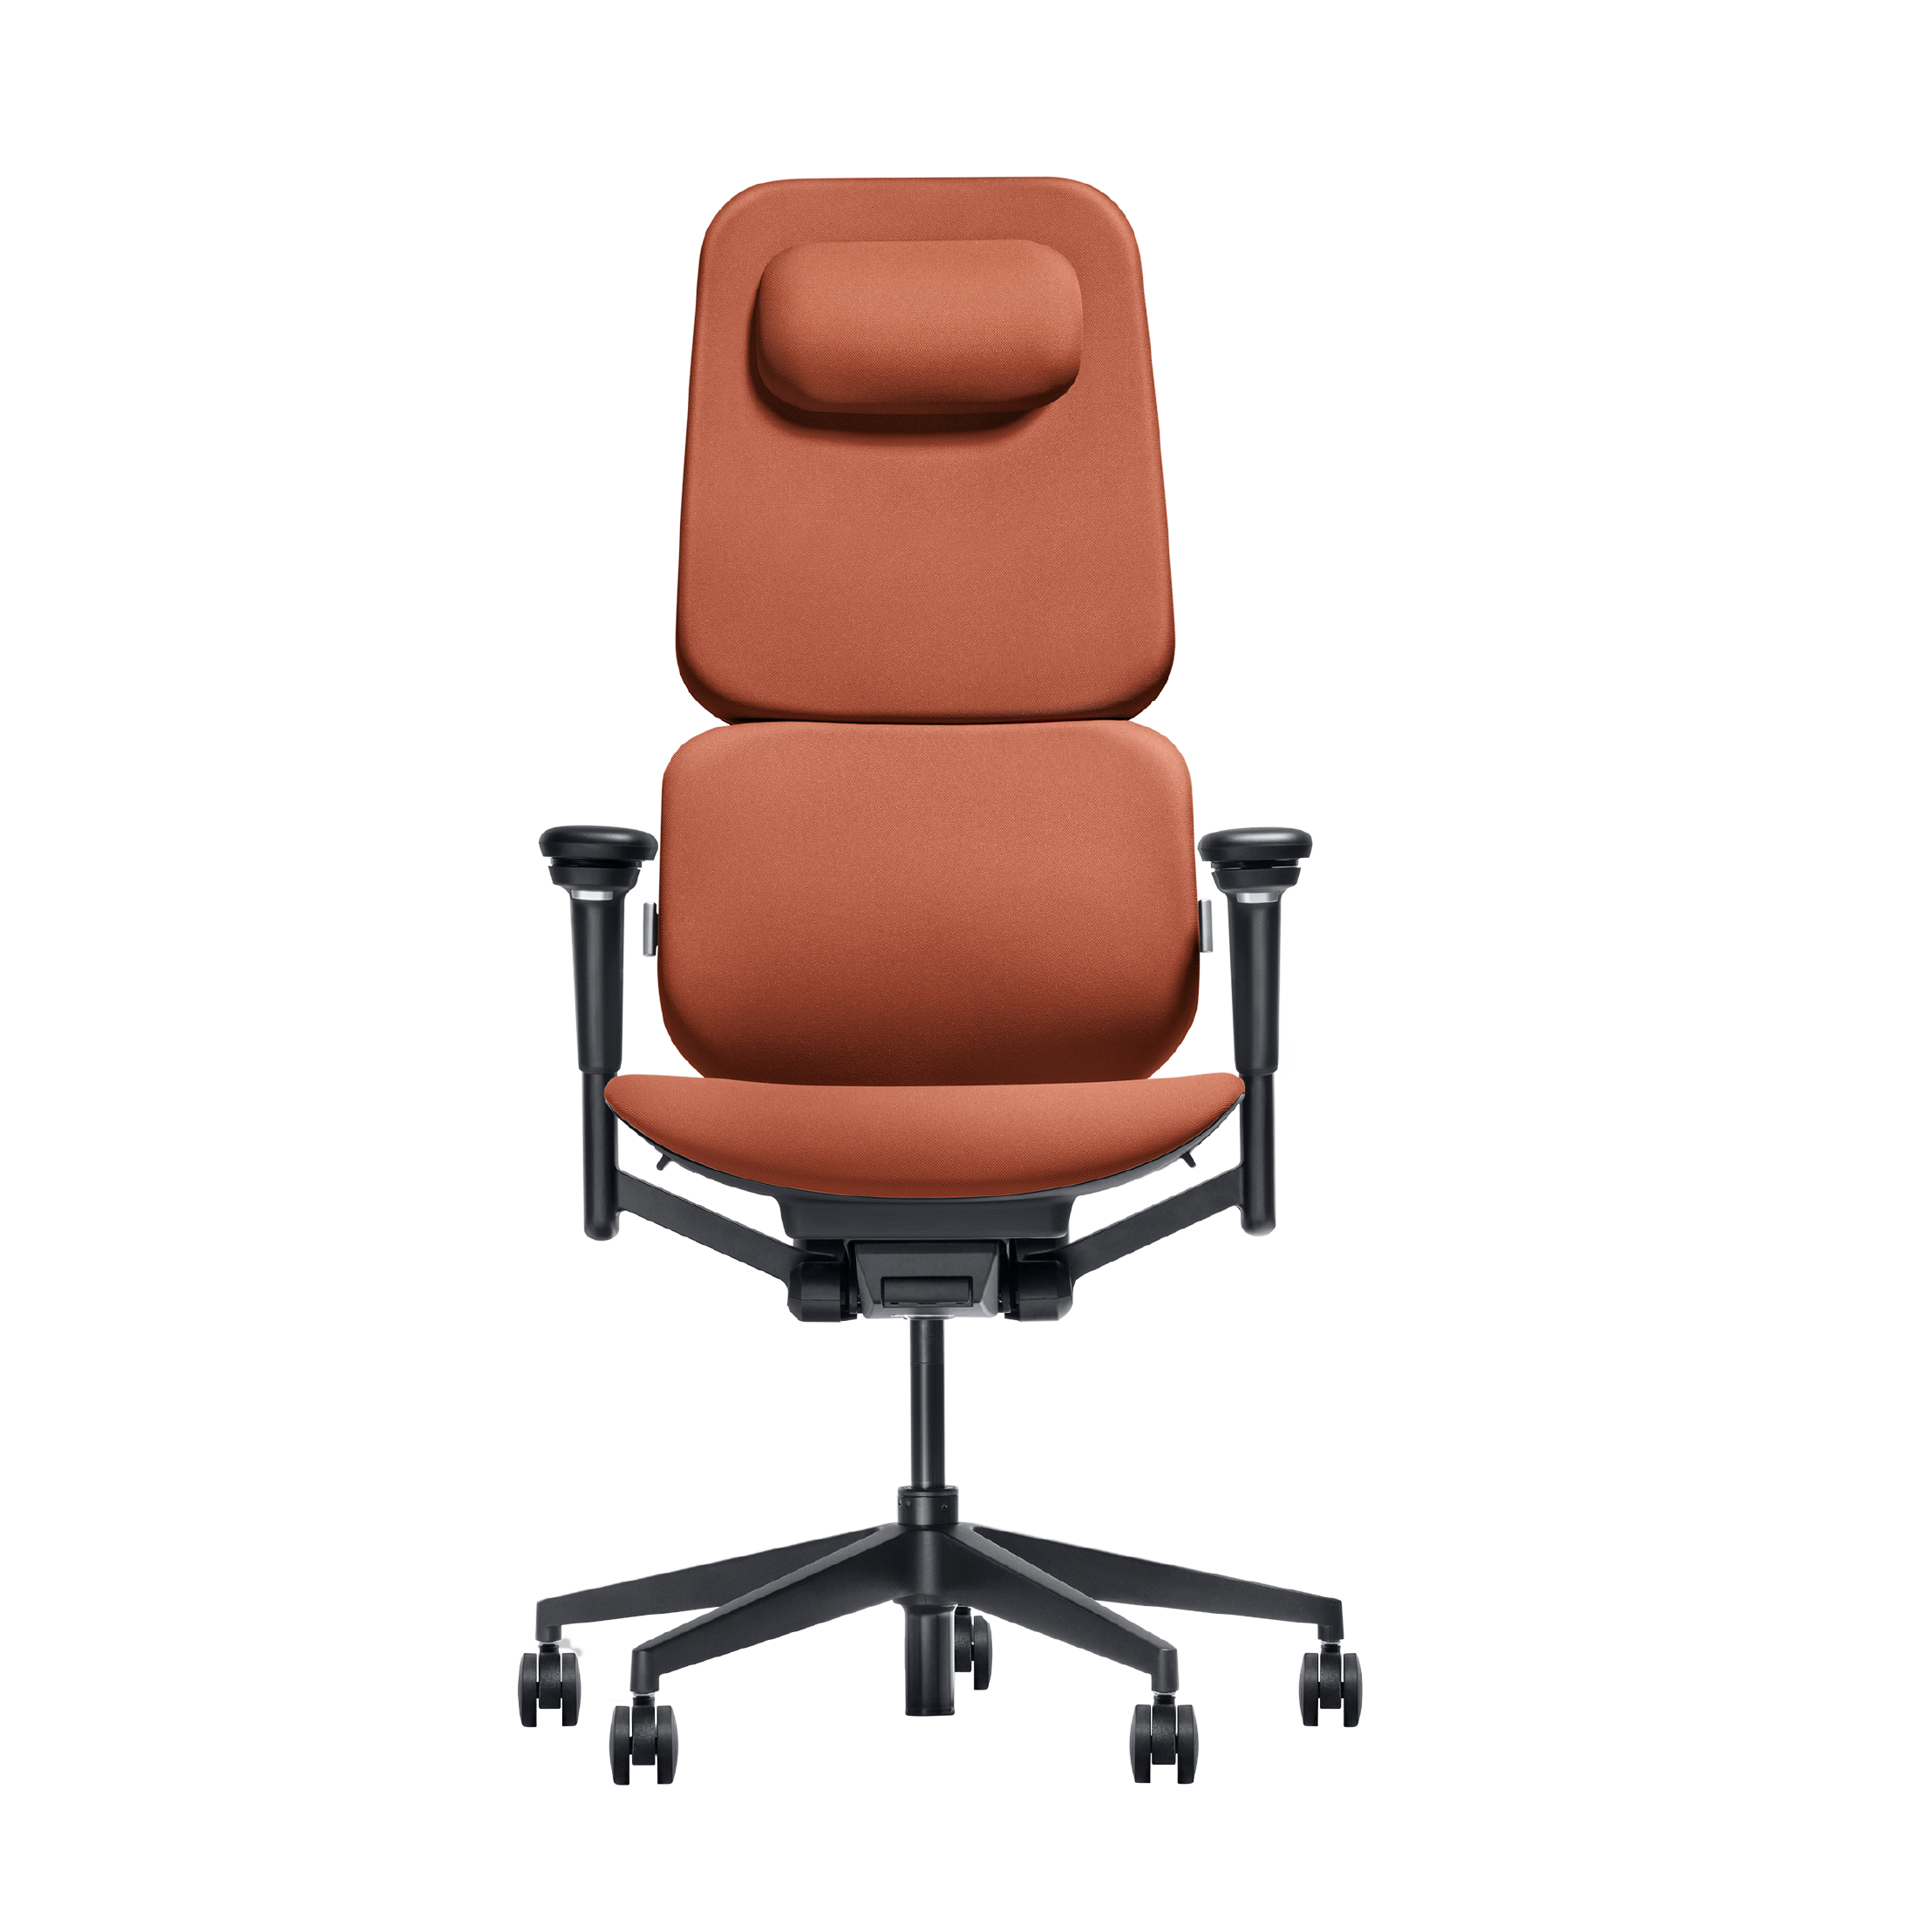 Atom chair- Highback Chai brown color